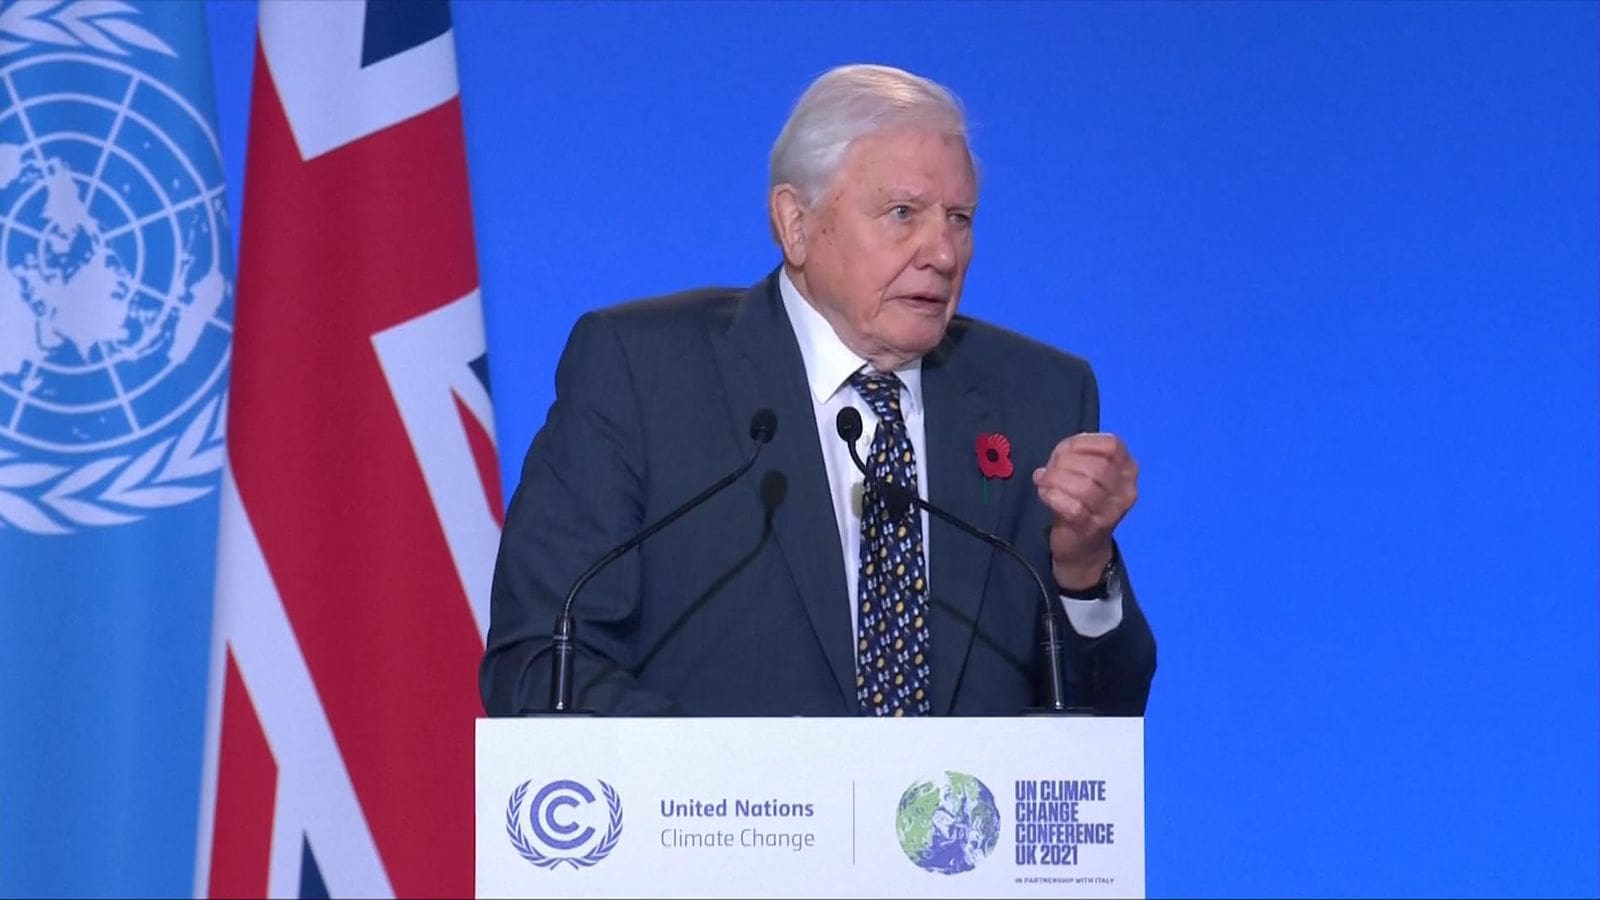 Watch Sir David Attenborough's inspirational speech at COP26